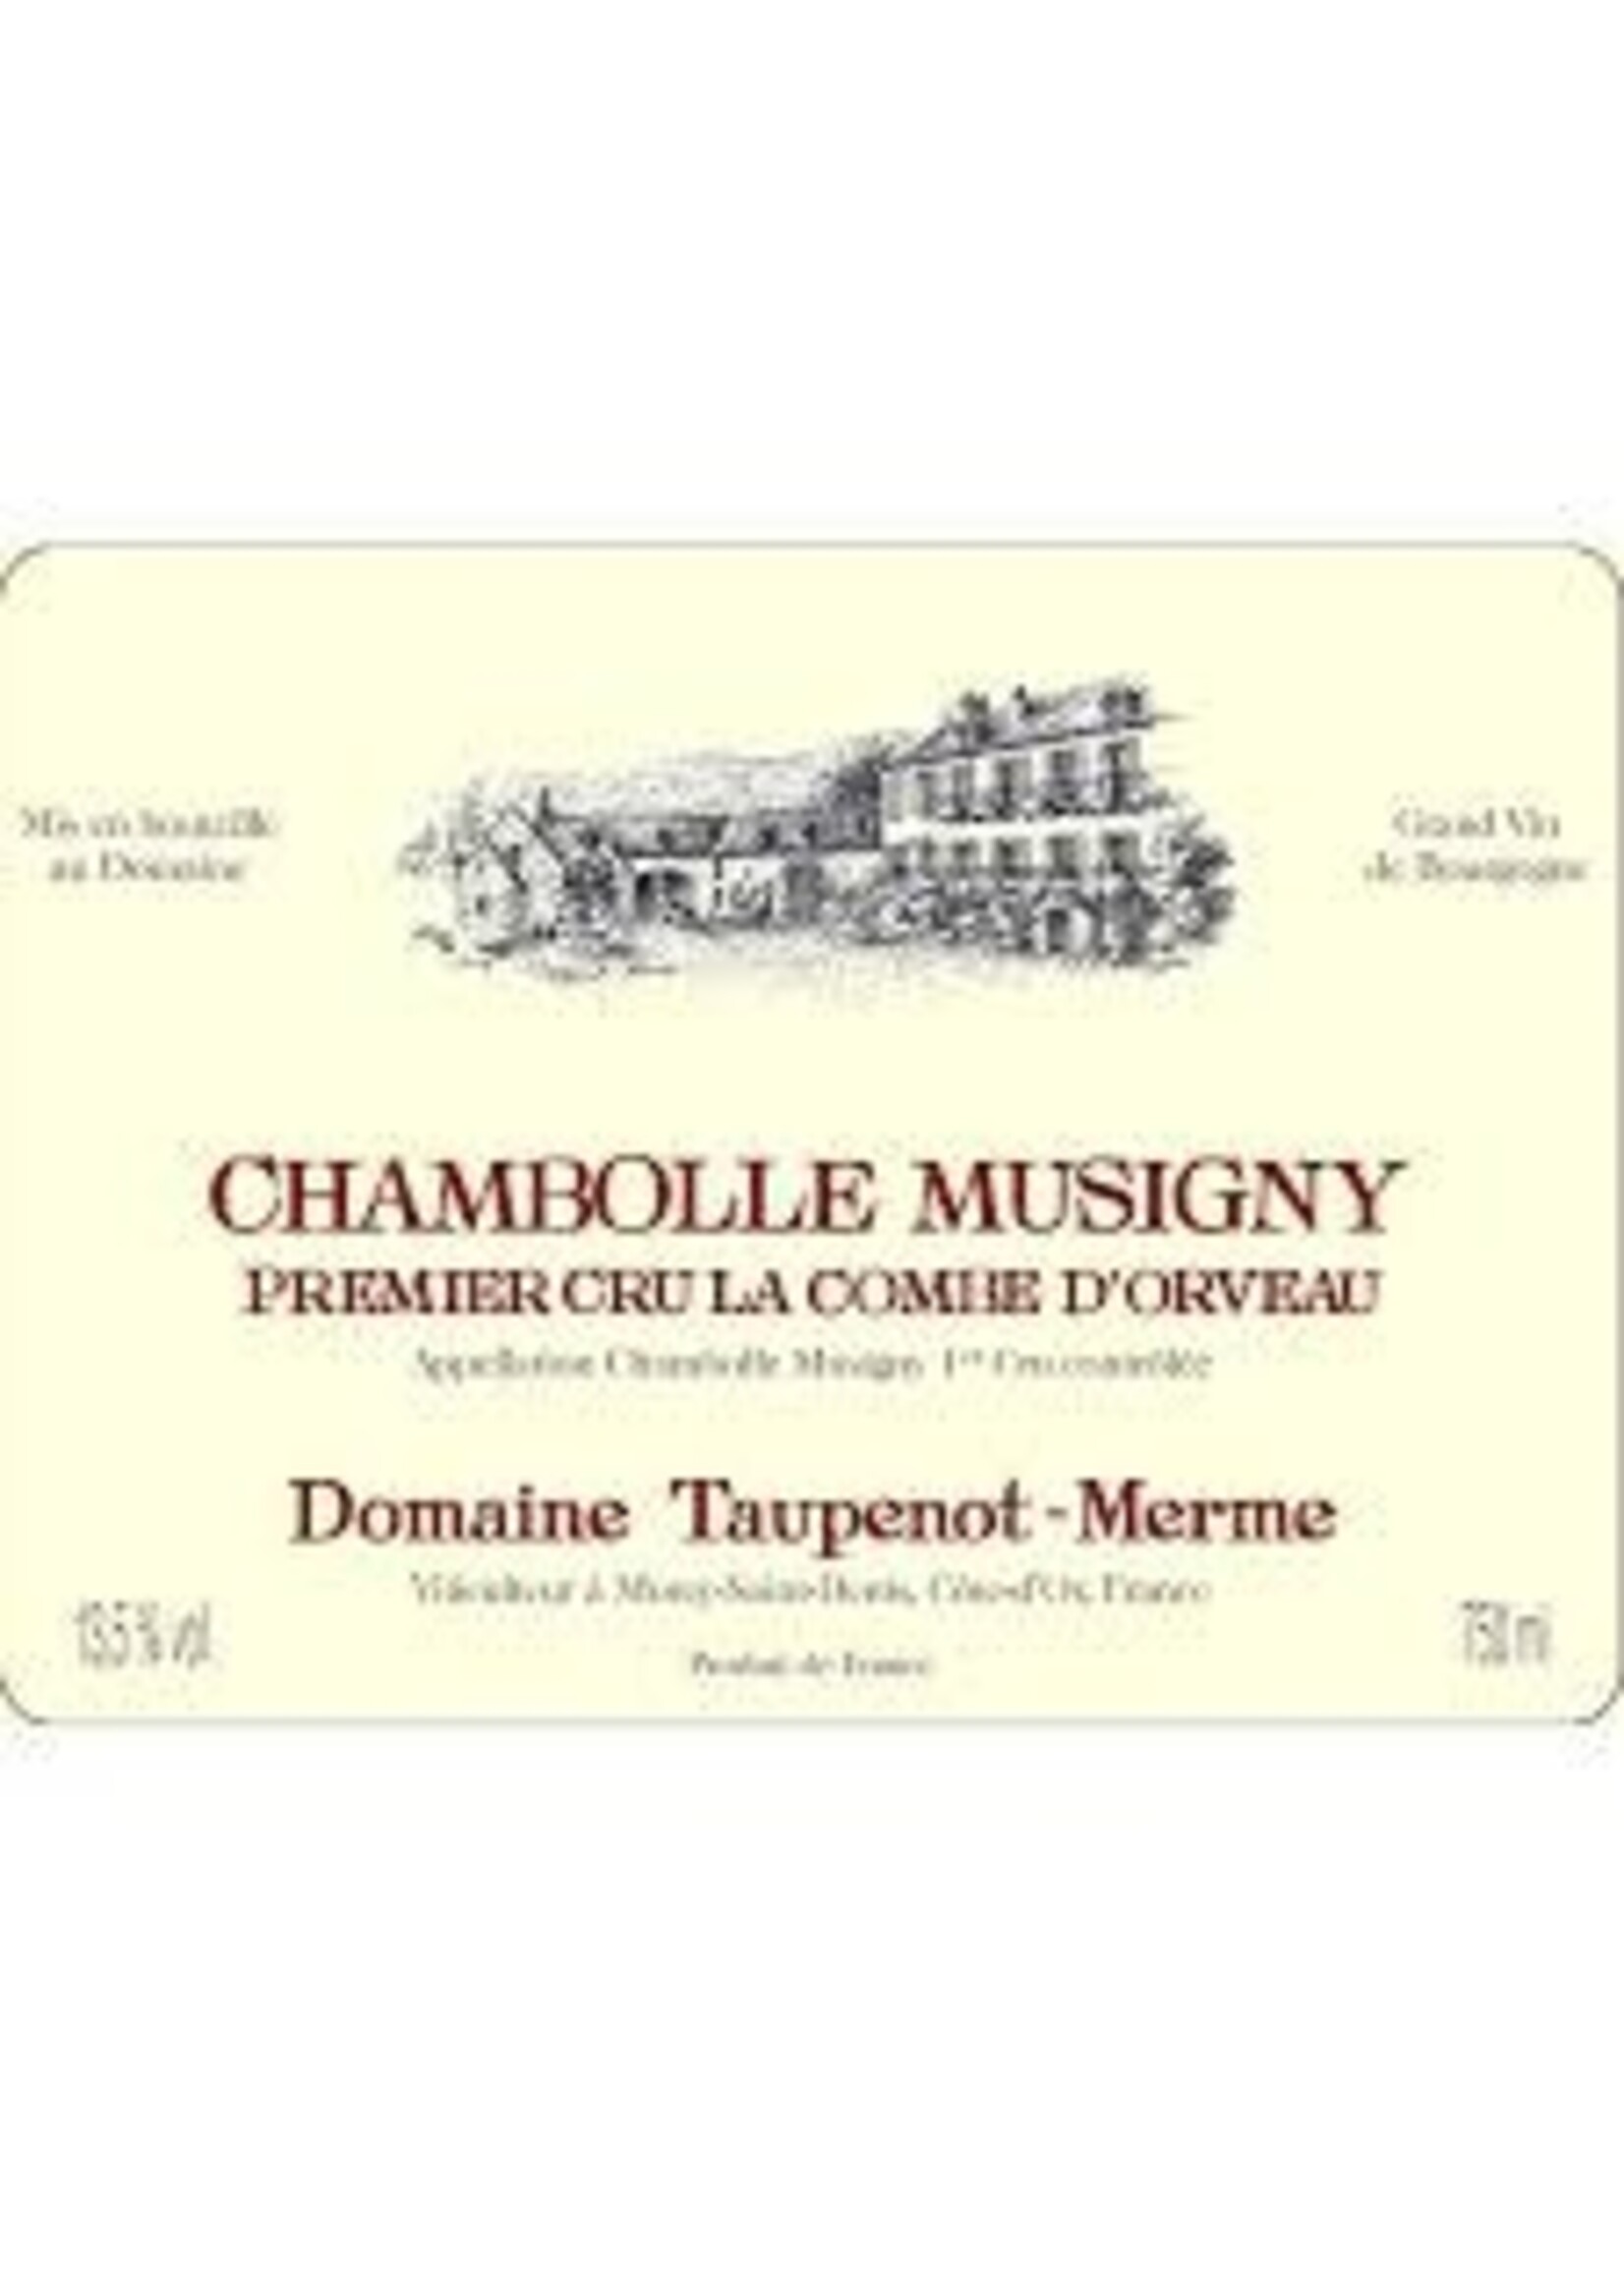 Taupenot-Merme 2021 Chambolle-Musigny 1er Cru La Combe d'Orveau 750ml